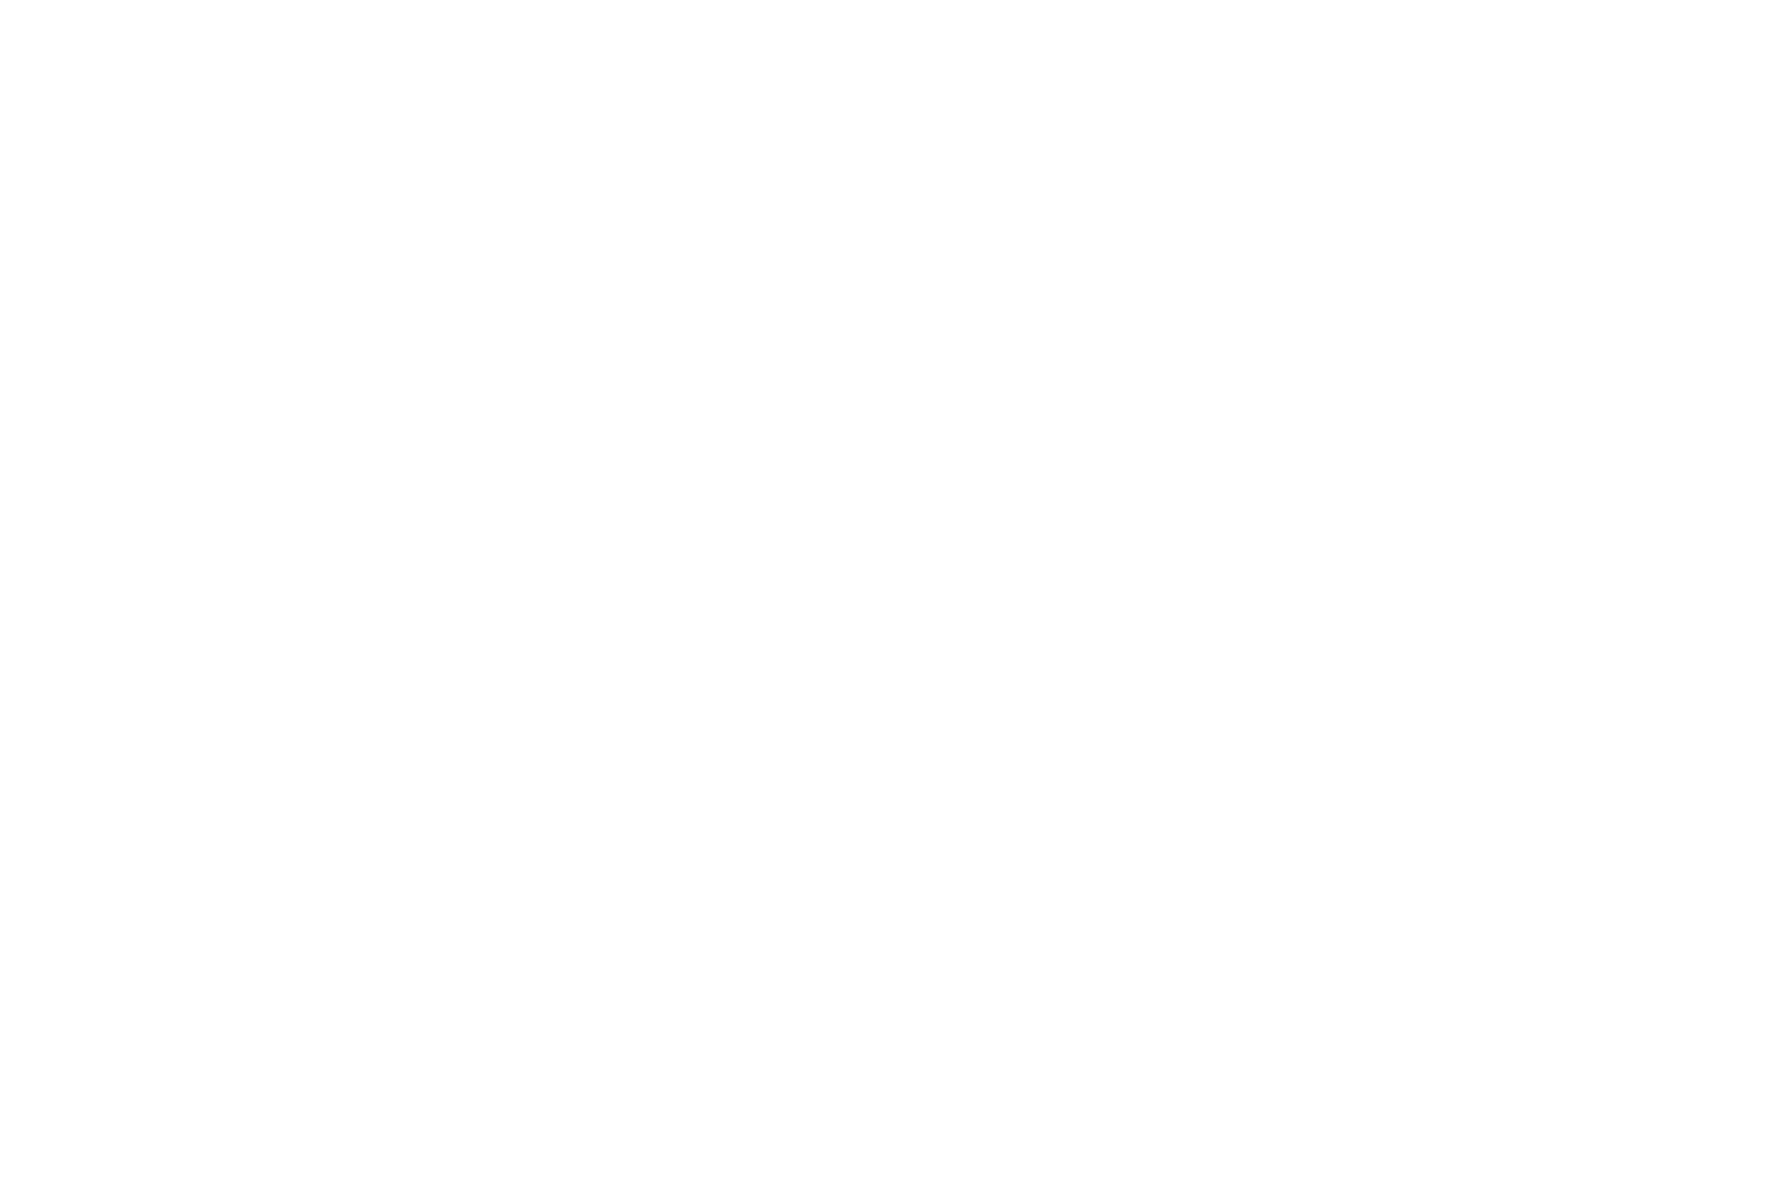 Montelago eco Trail